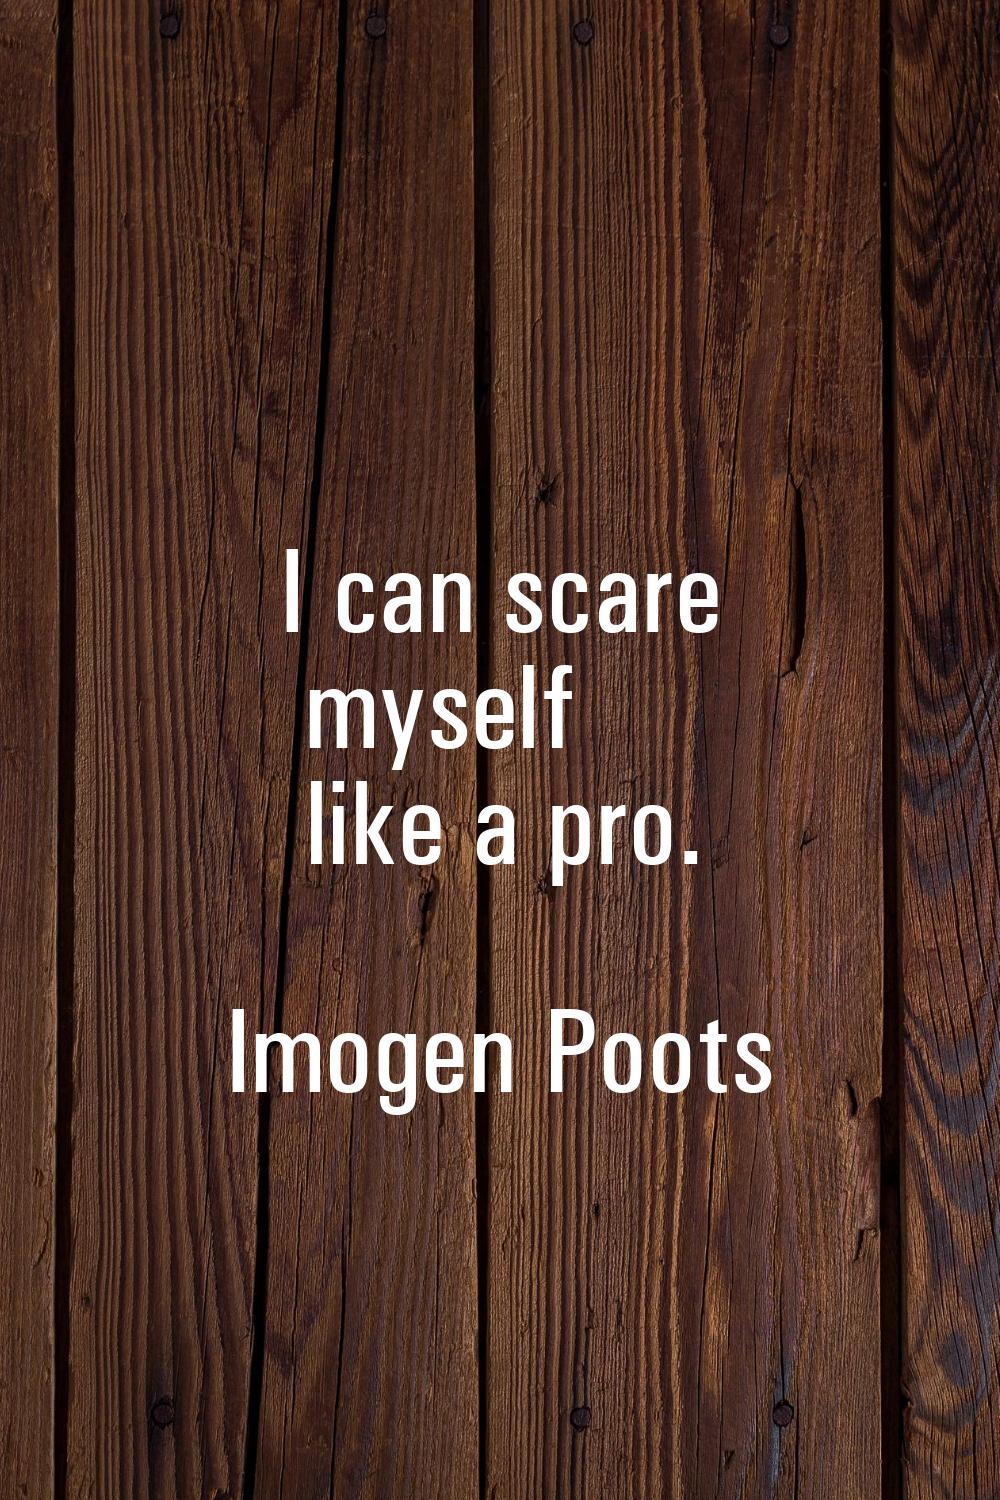 I can scare myself like a pro.